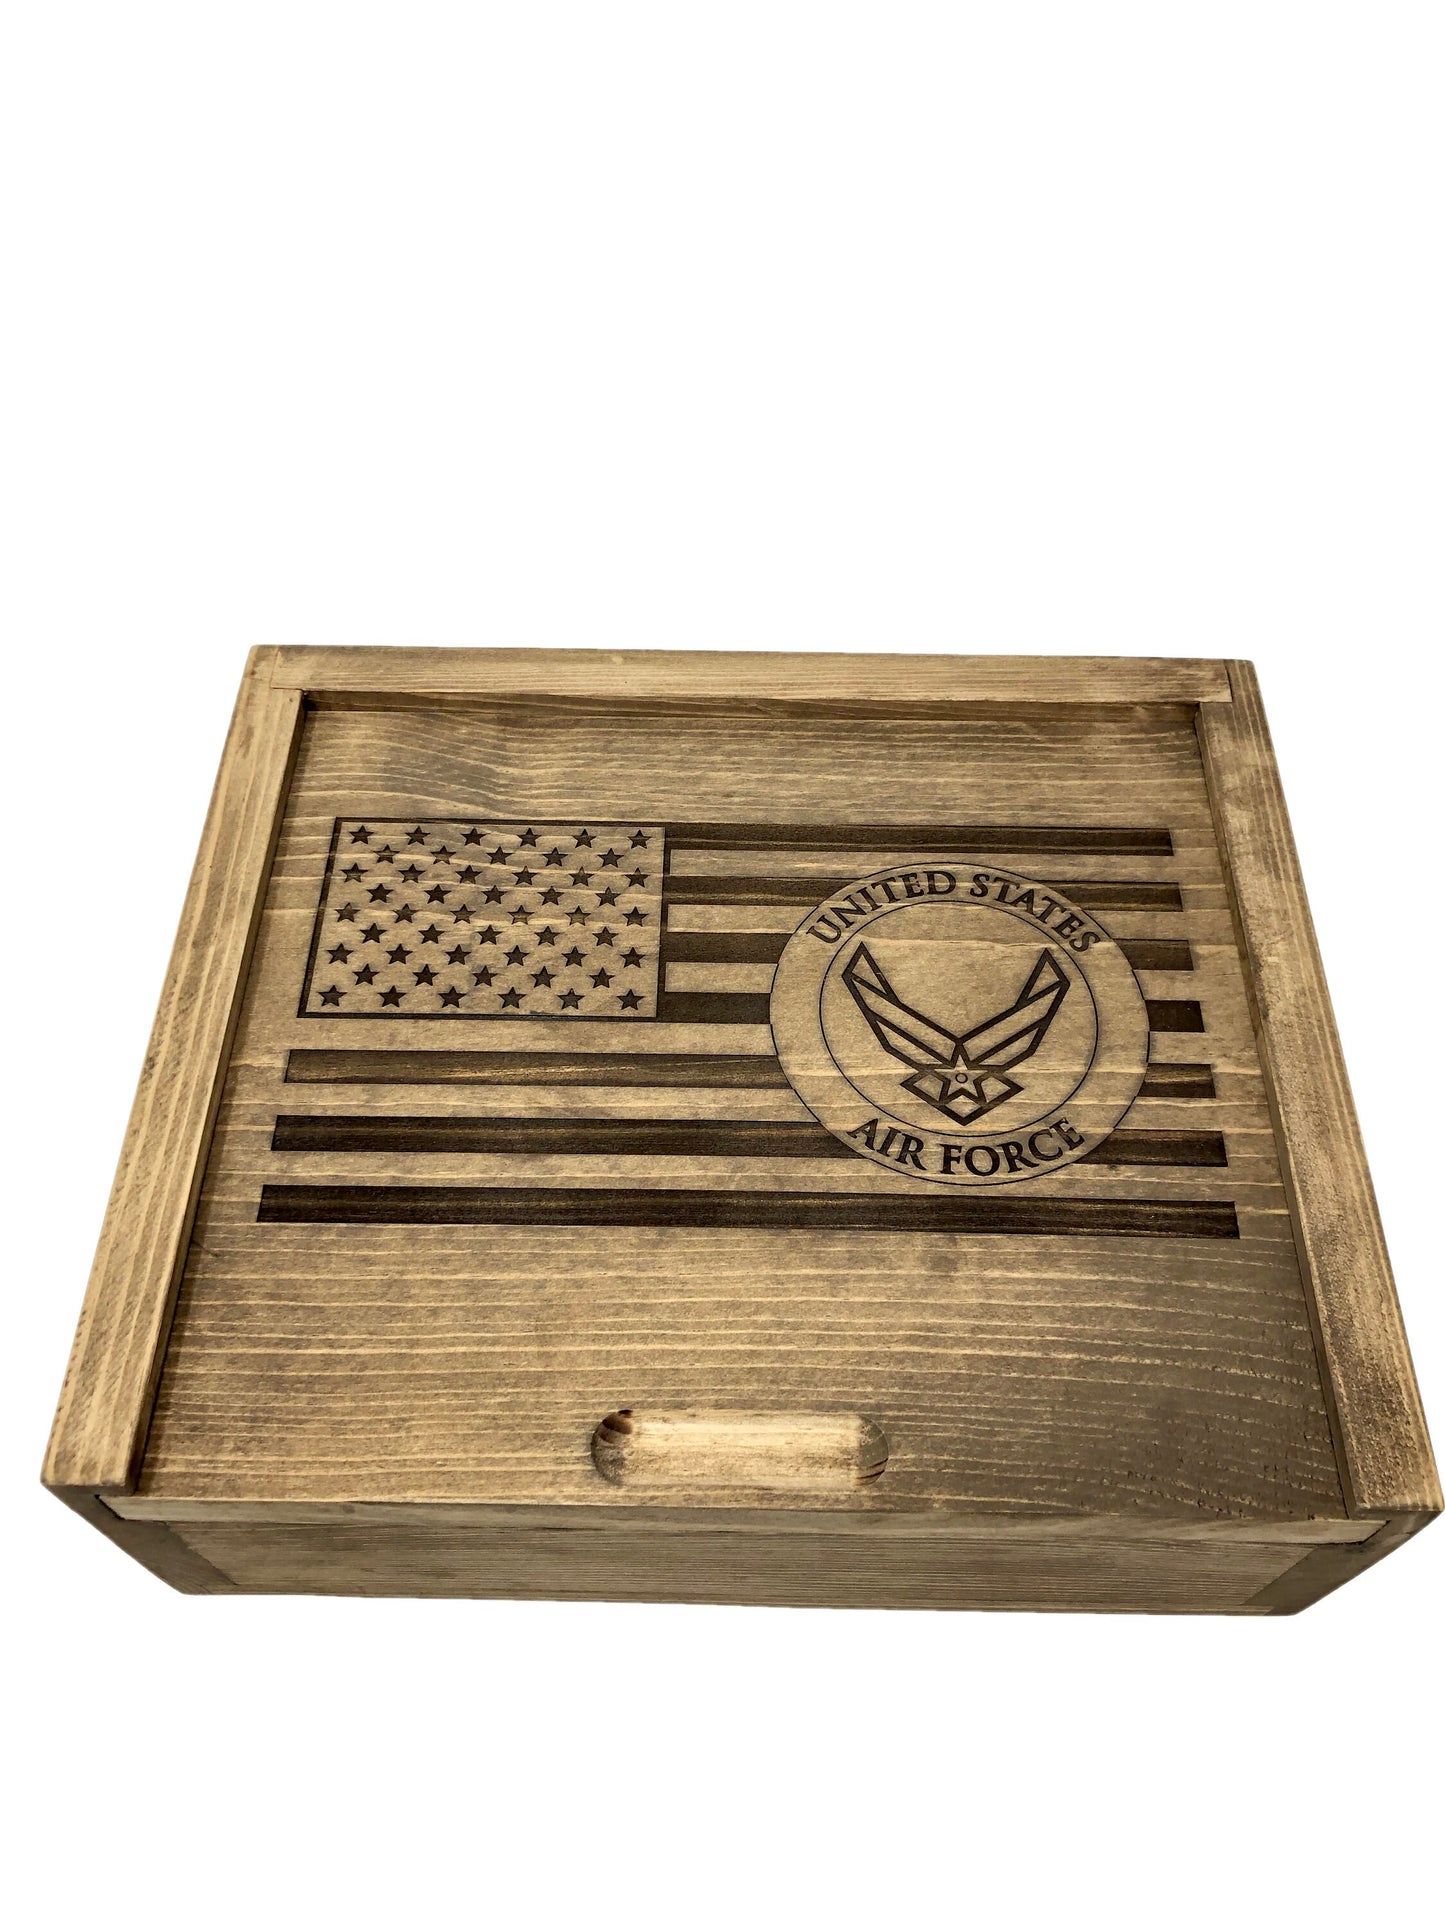 Air Force Rustic Flag Box | Army, Navy, Marines, Coast Guard | Veteran Gift | Bootcamp | Retirement Gift Idea | Handmade | Military